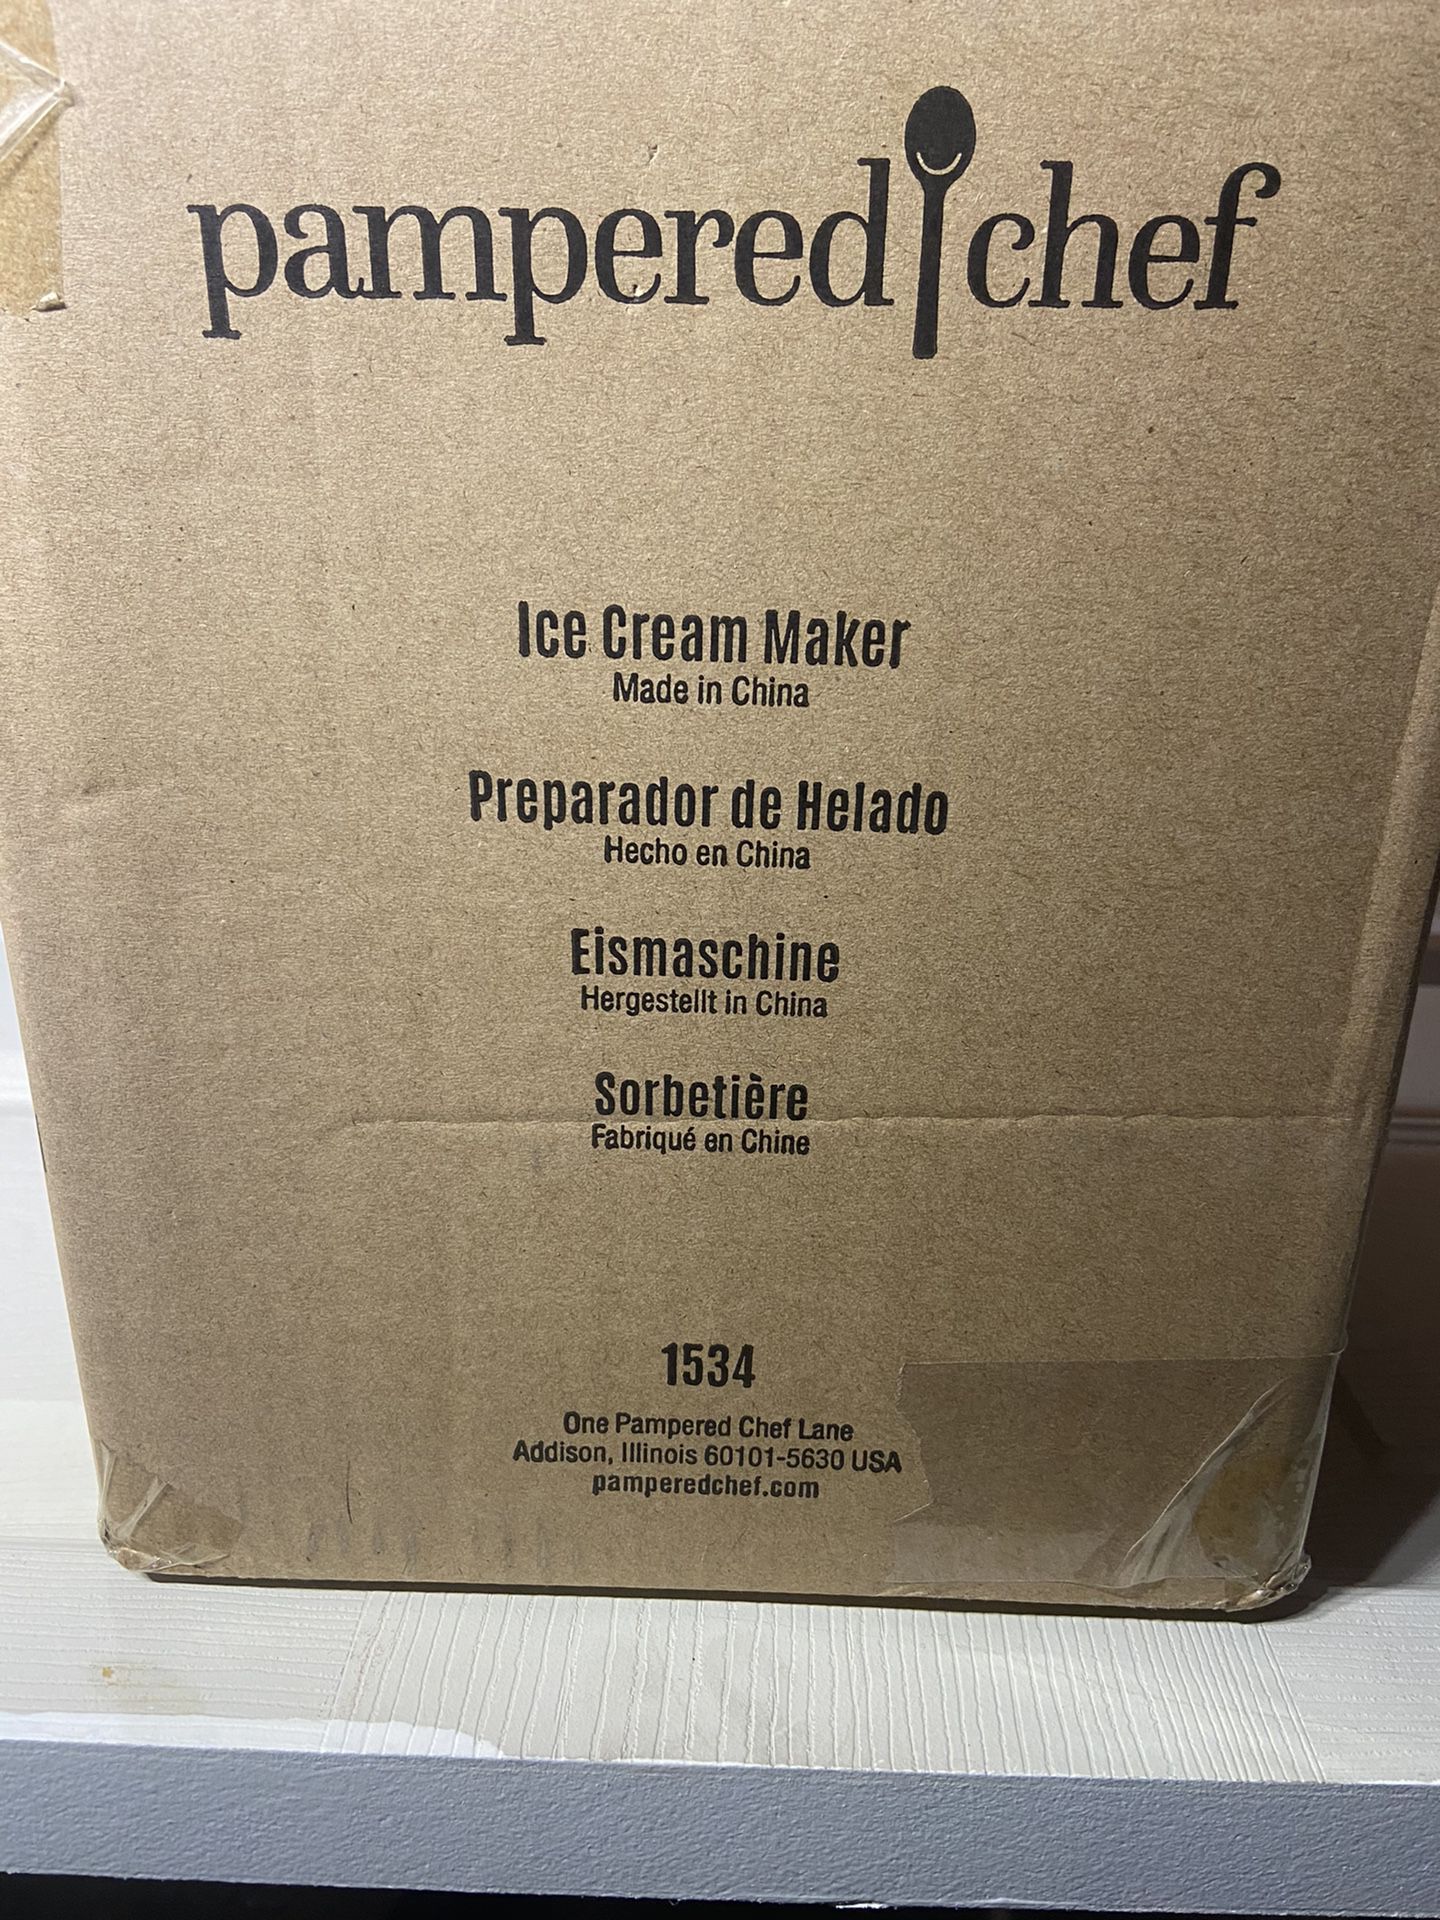 Ice Maker 